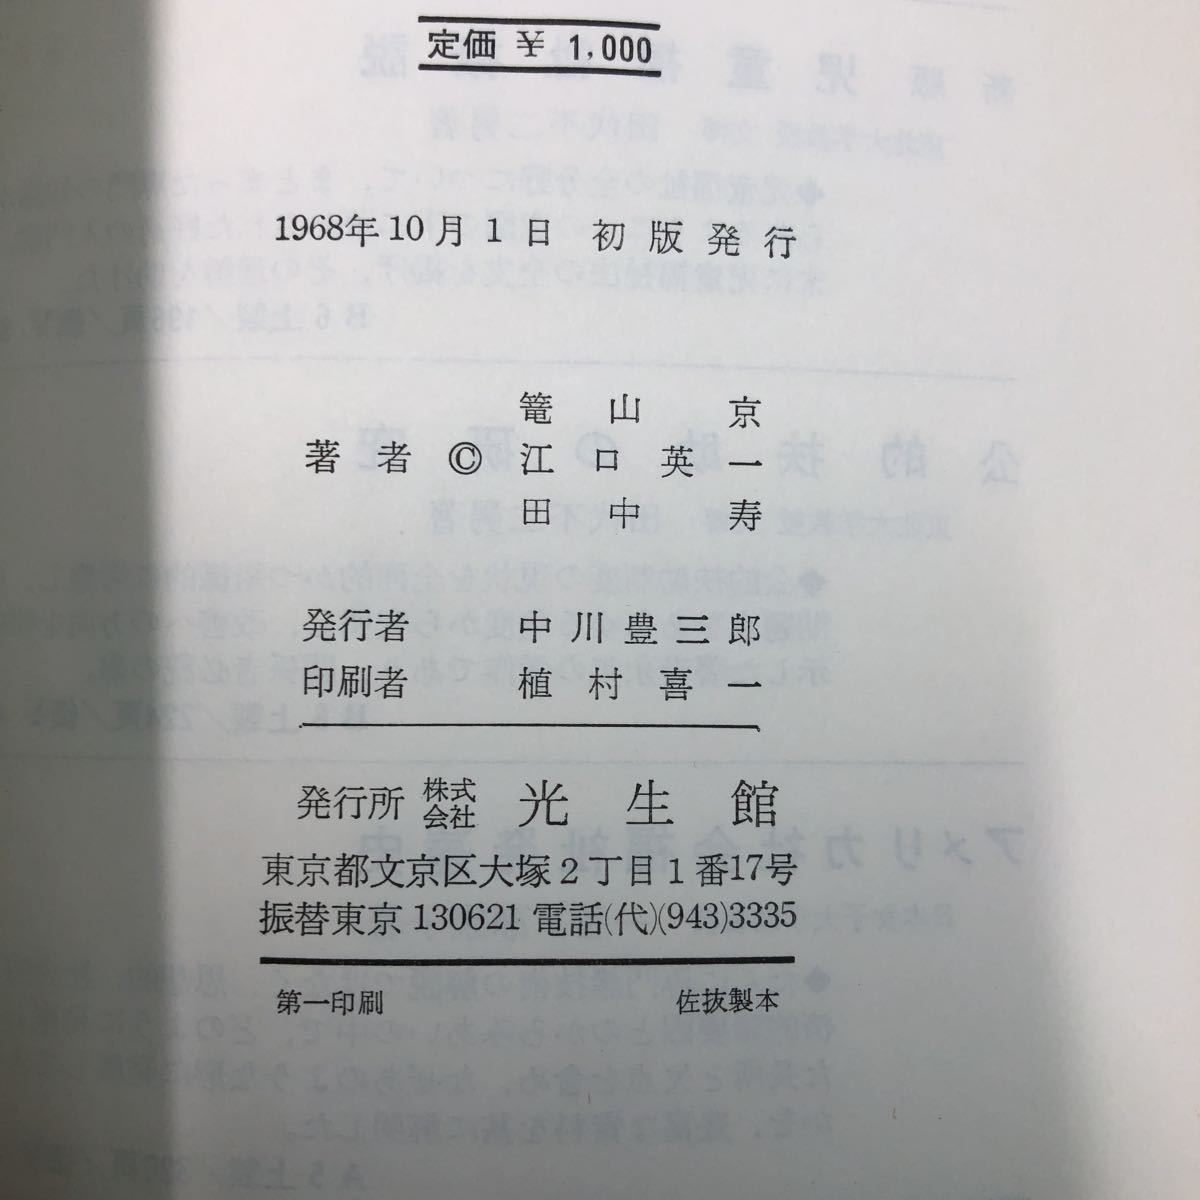 S6h-108 公的扶助制度比較研究 著者 江口英一 田中寿 など 1968年10月1日 初版発行 光生館 社会 役所 制度 研究 イギリス アメリカ 日本の画像5